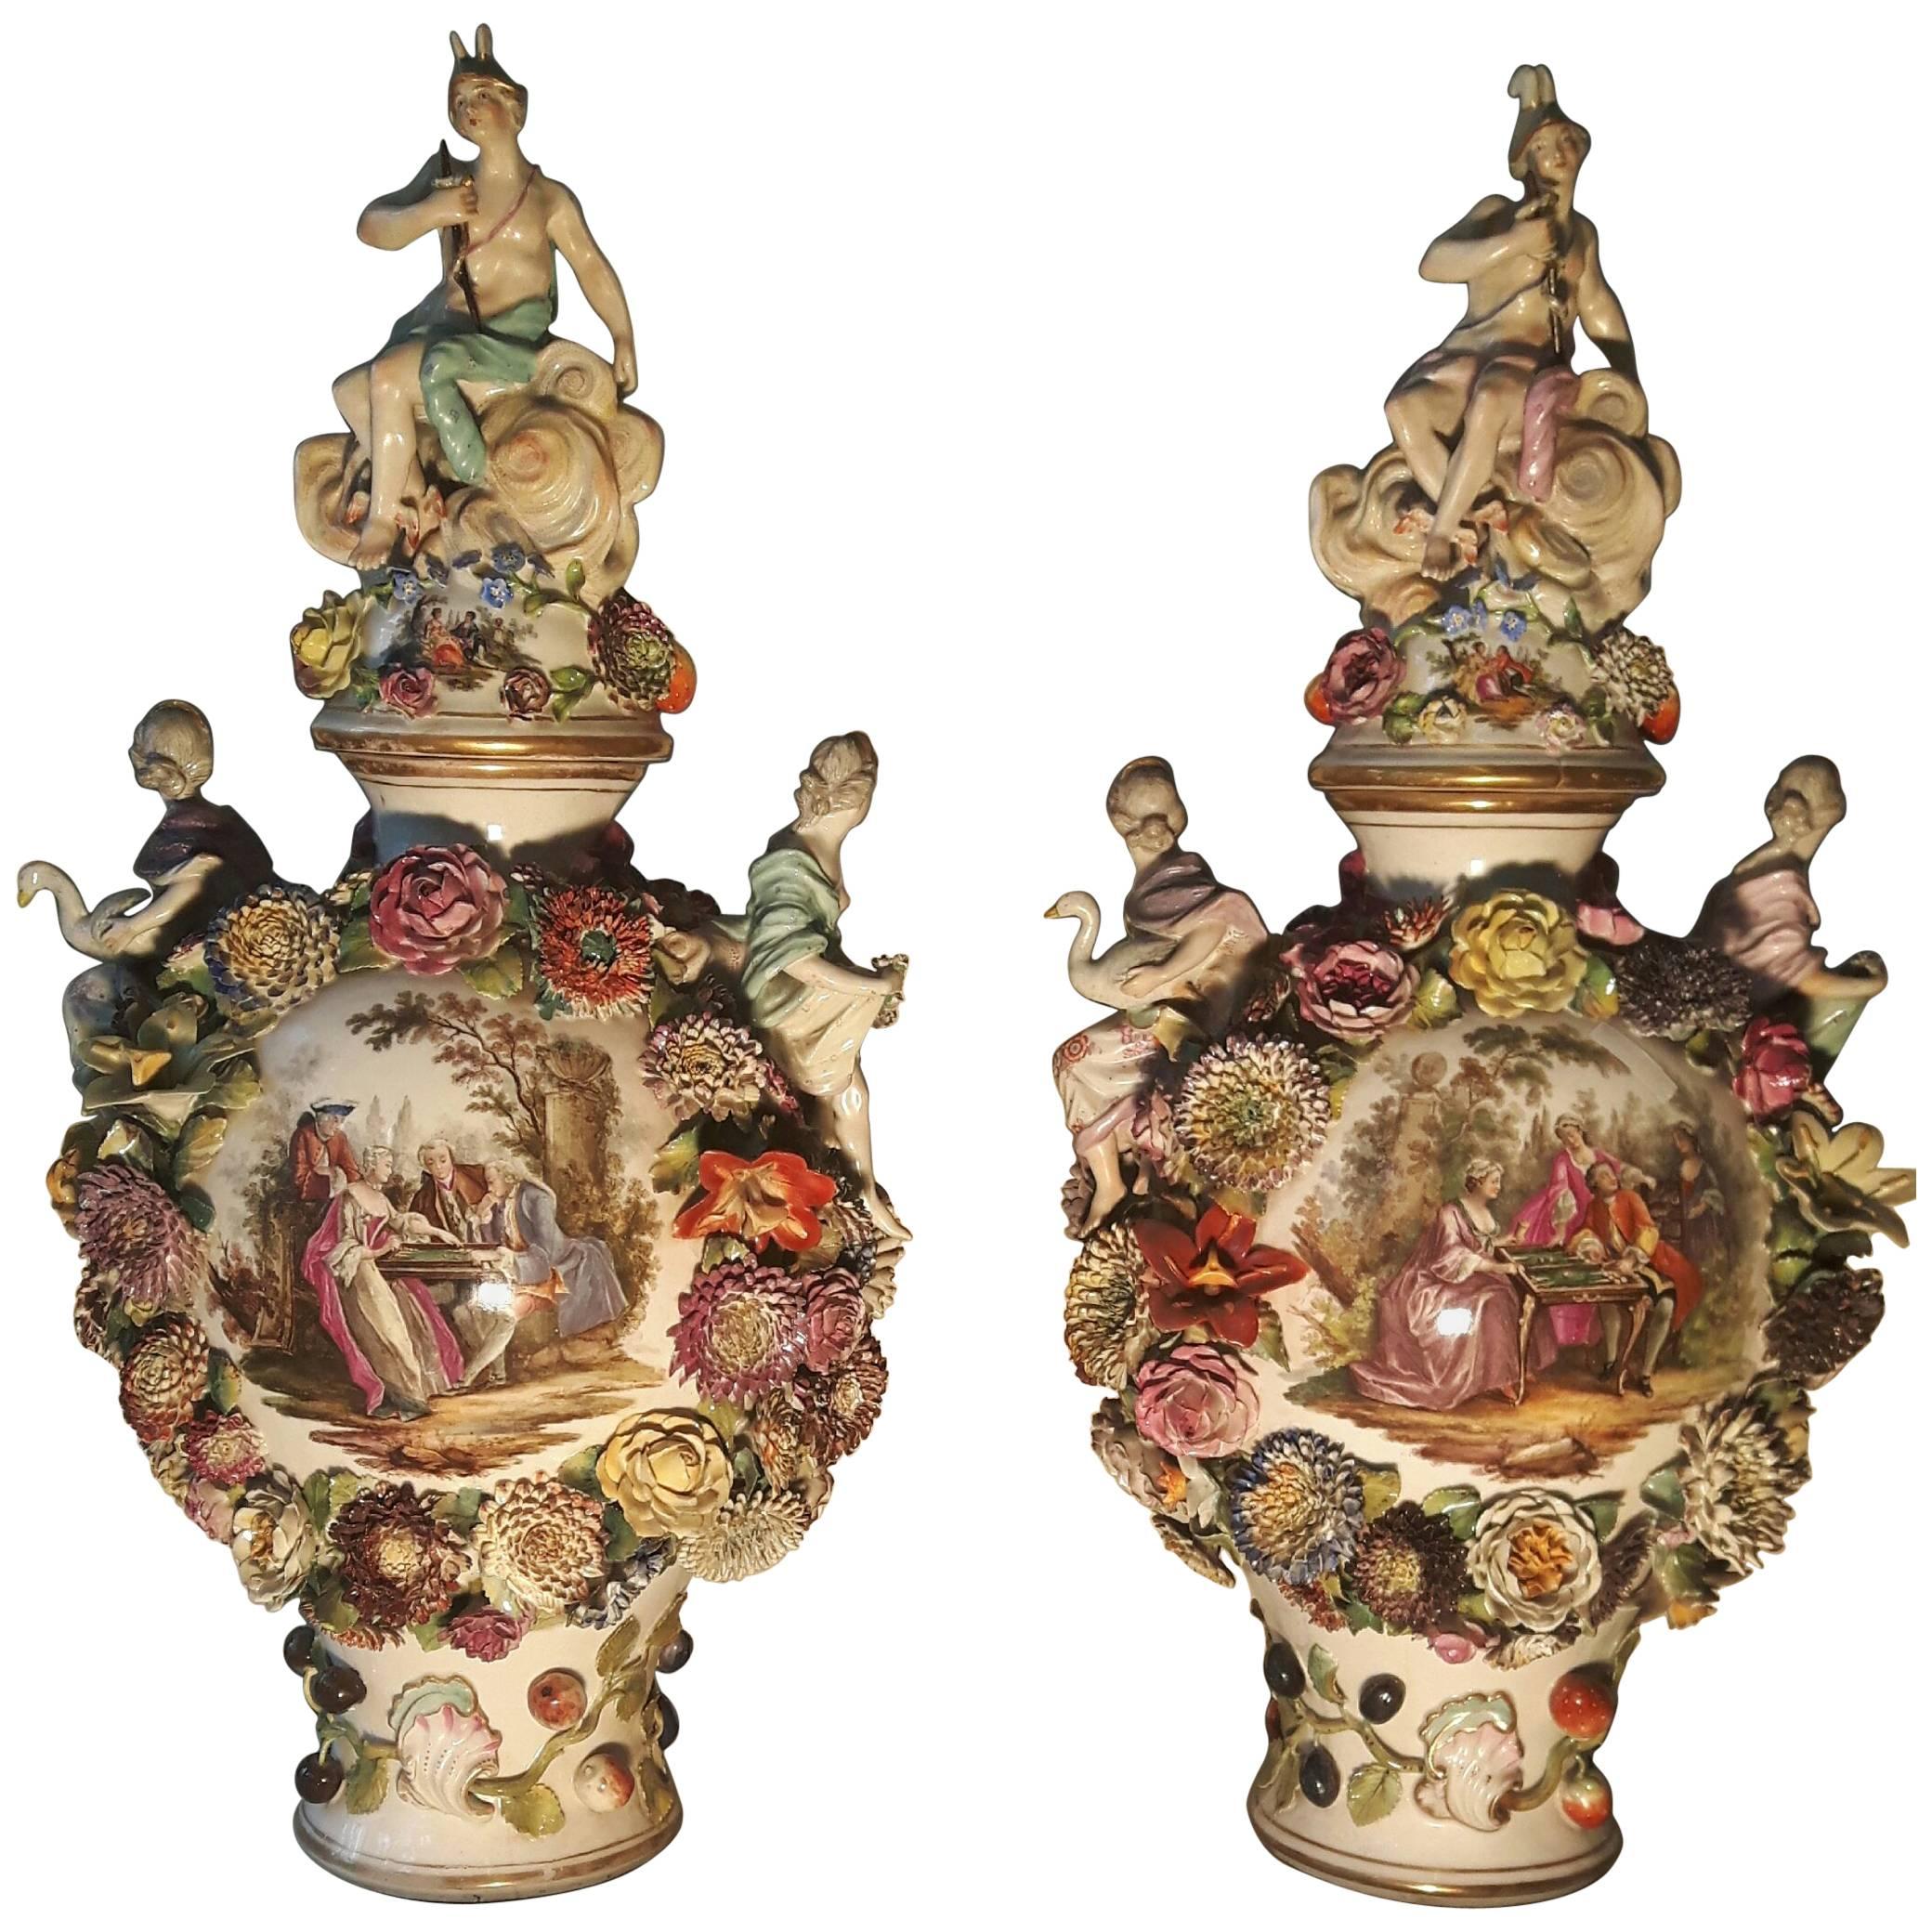 Very Impressive Pair of 19th Century Dresden Vases